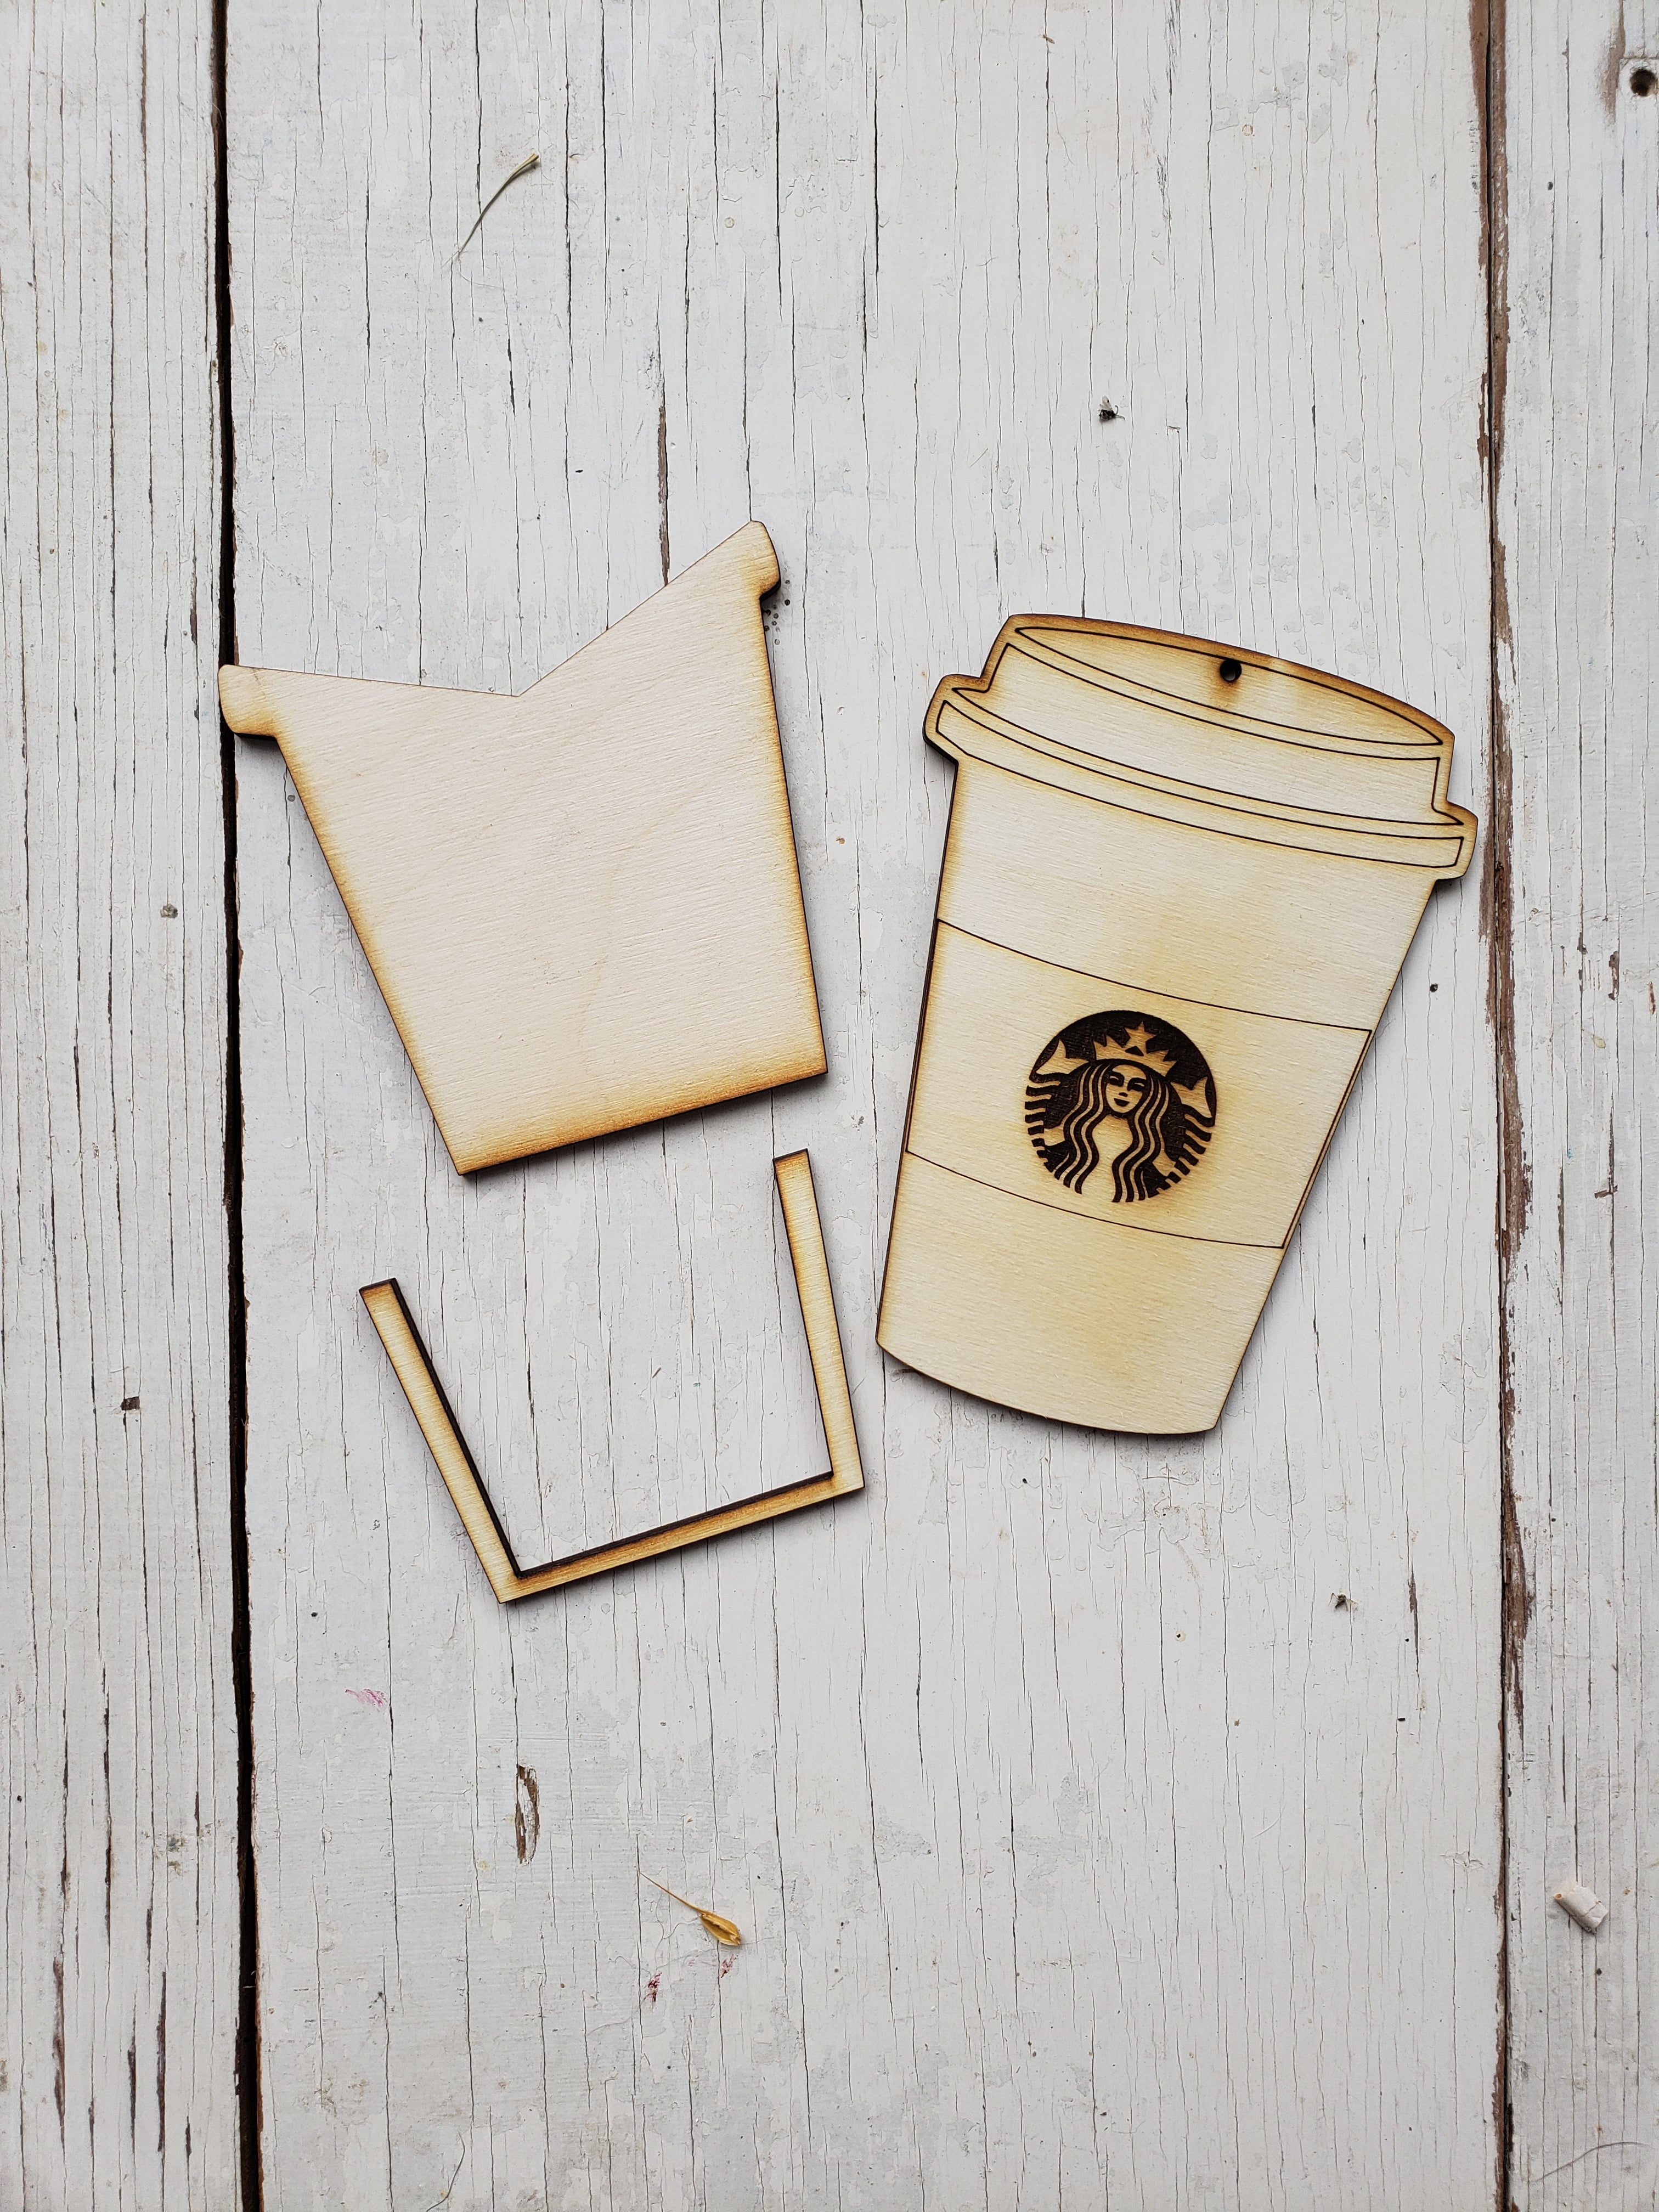 Starbucks Card - Traditional: Starbucks Coffee Company